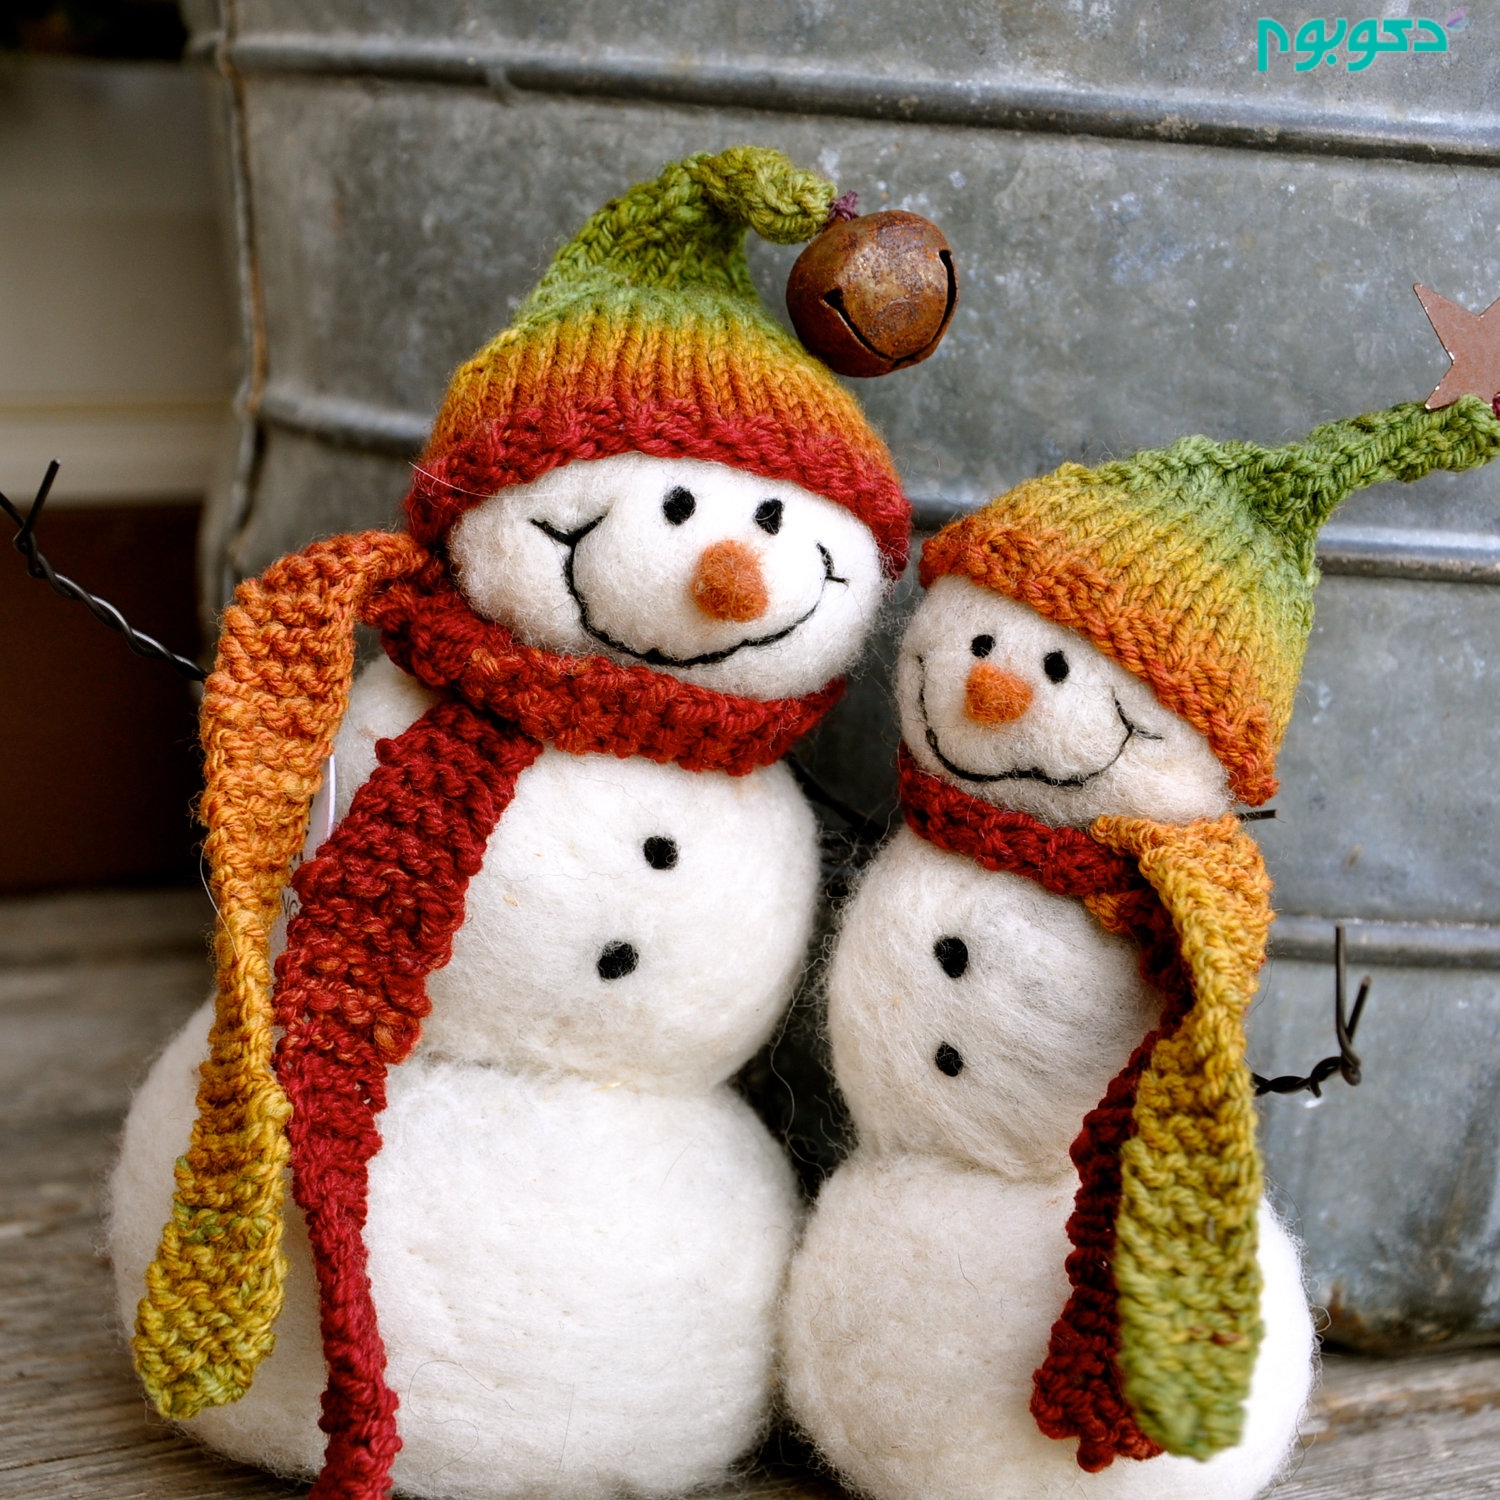 08-snowman-buddies-christmas-outdoor-decoration-homebnc.jpg